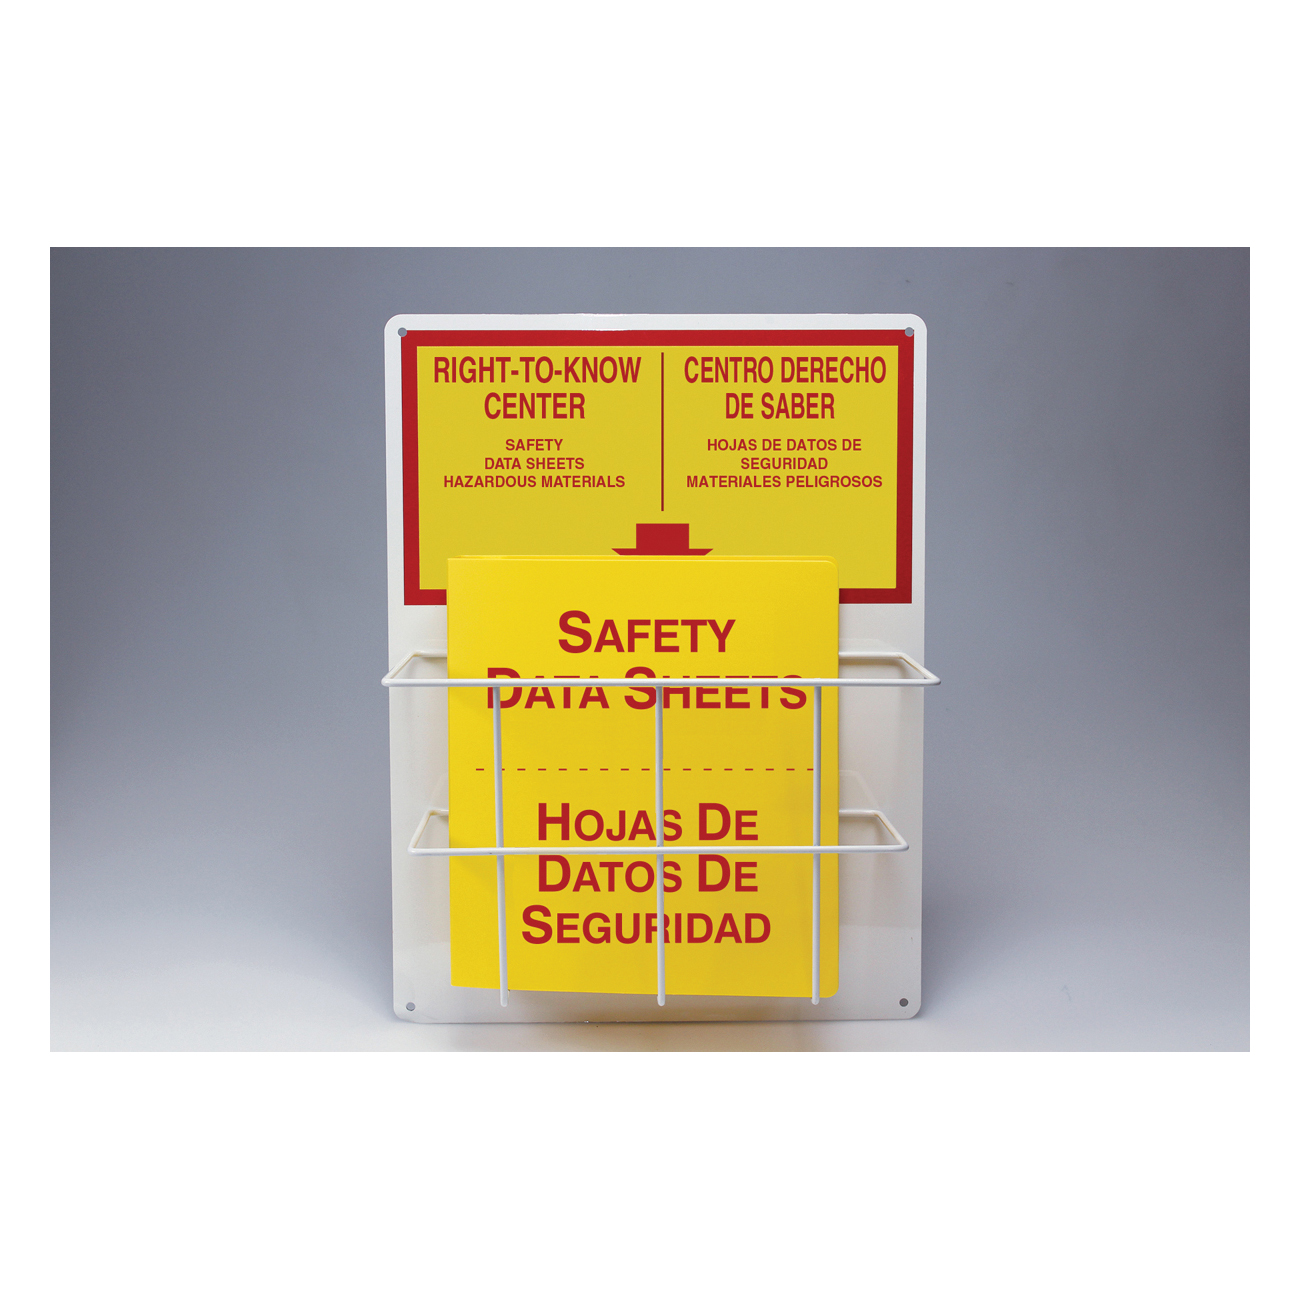 Accuform® SBZRS326 Bilingual RTK Center Board Kit, RIGHT TO KNOW CENTER SAFETY DATA SHEETS HAZARDOUS MATERIALS/CENTRO DERECHO DE SABER HOJAS DE DATOS DE SEGURIDAD MATERIALES PELIGROSOS Legend, English/Spanish, Yellow, 20 in H x 15 in W, Aluminum